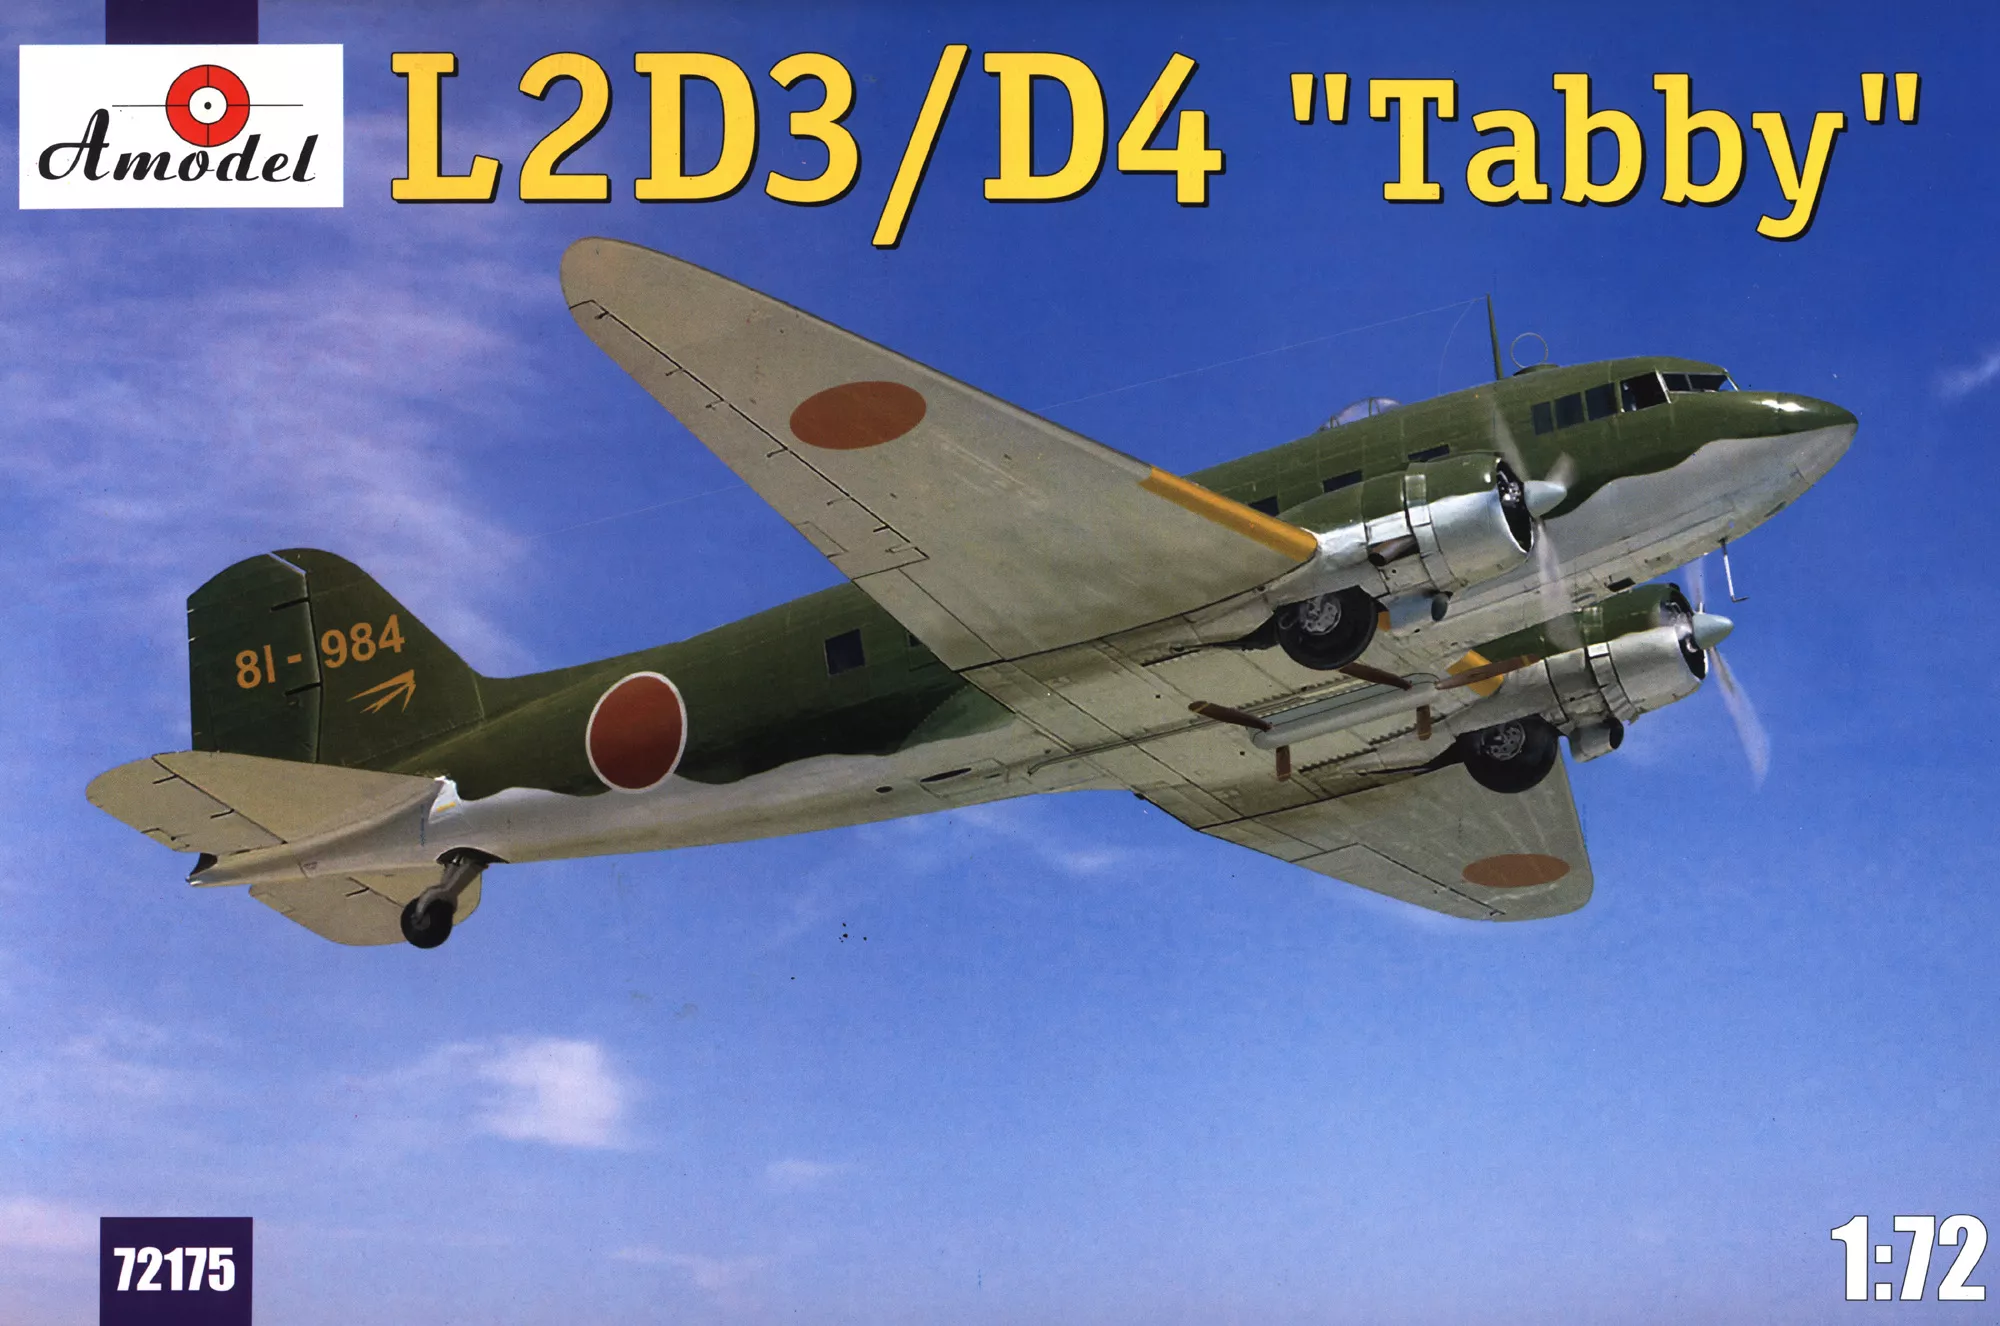 Amodel - L2D3/D4 Taddy Japan transport aircraft 